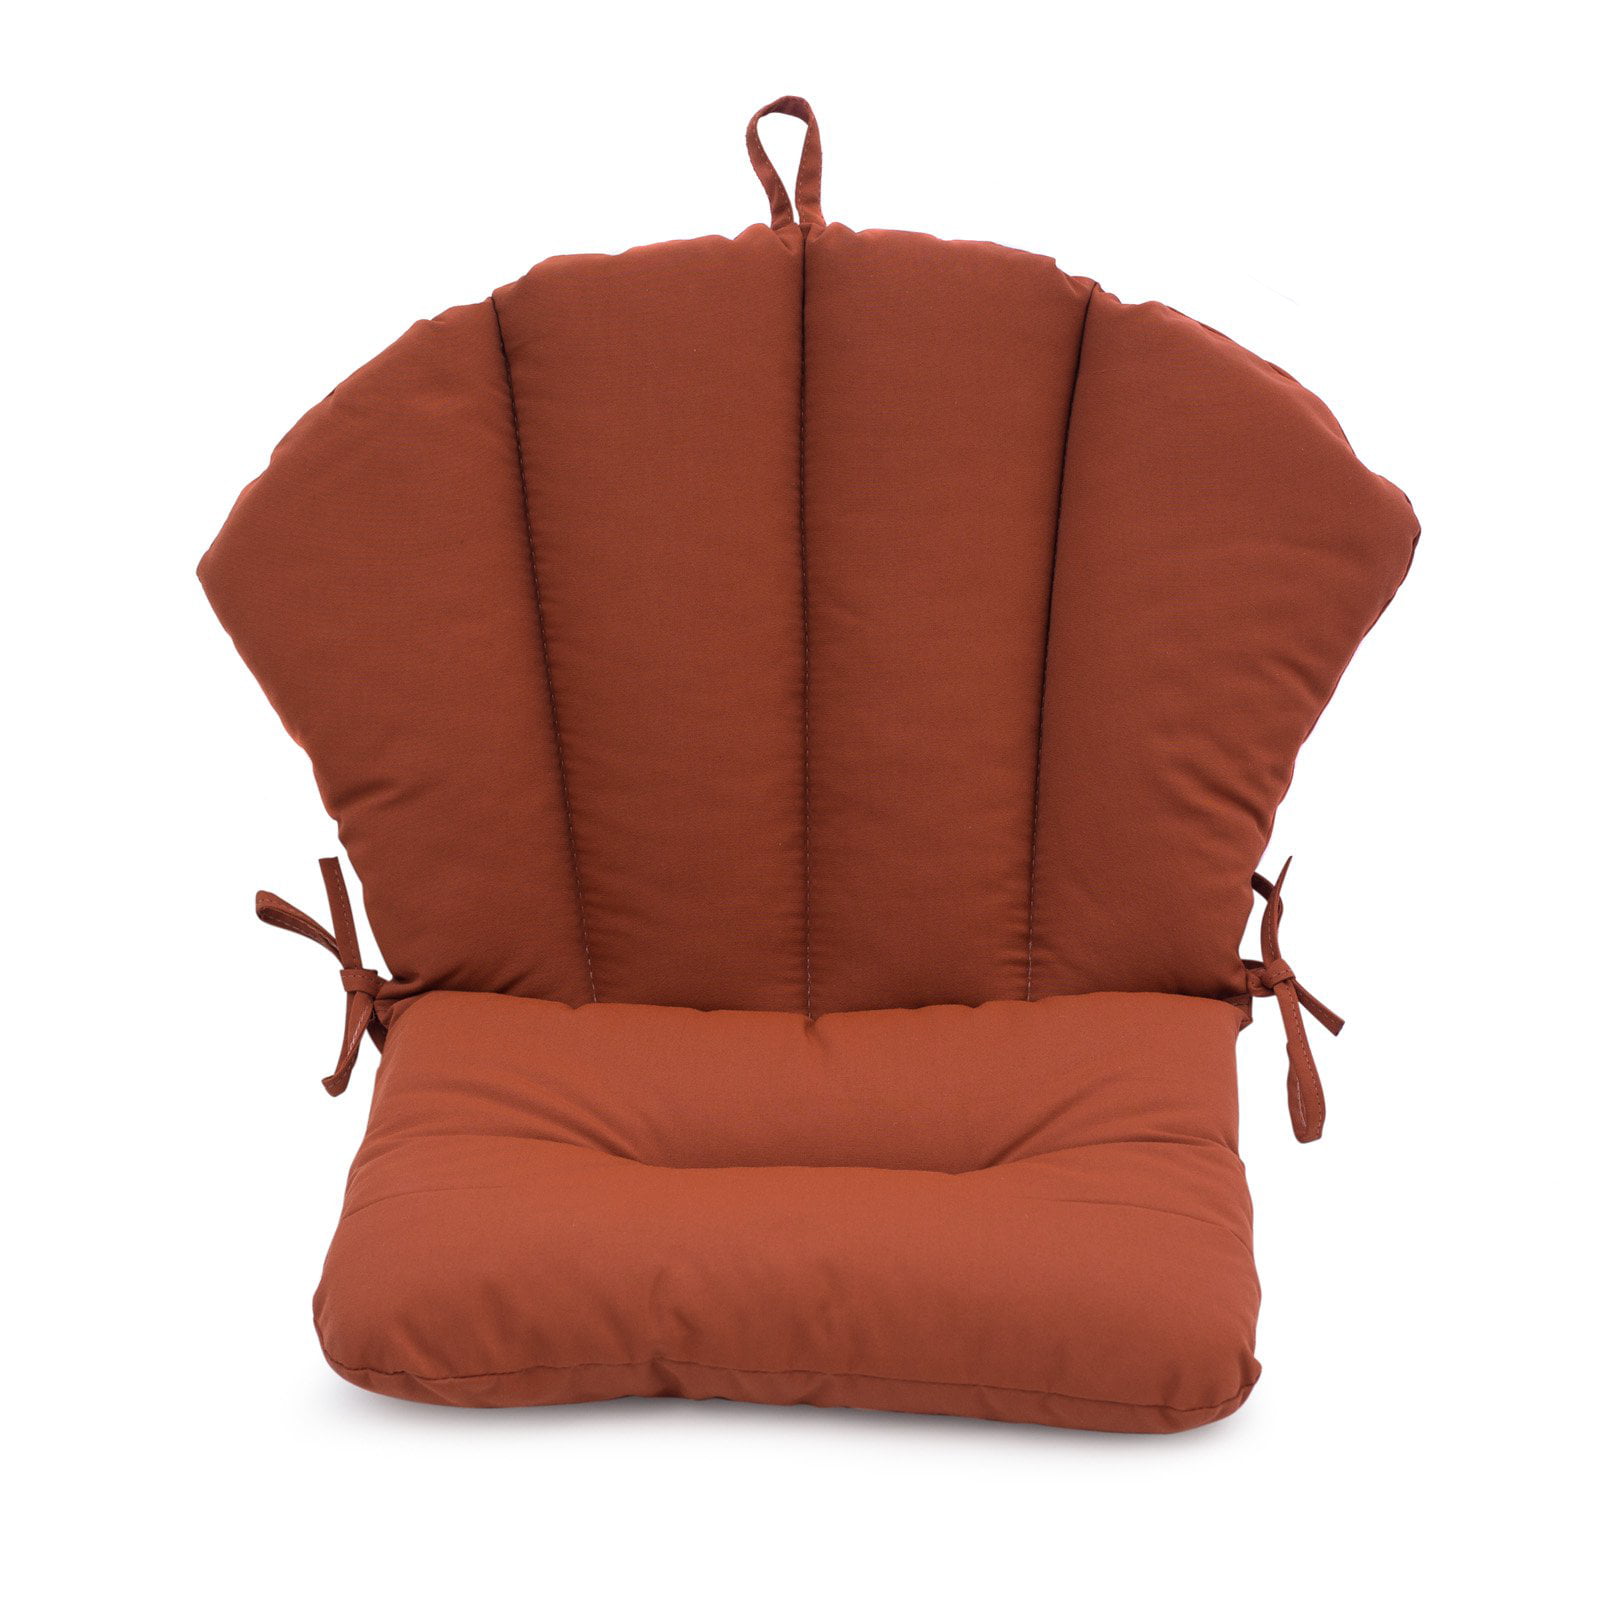 Coral Coast Cantara Barrel Back Chair Cushion 30 X 18 In Walmart